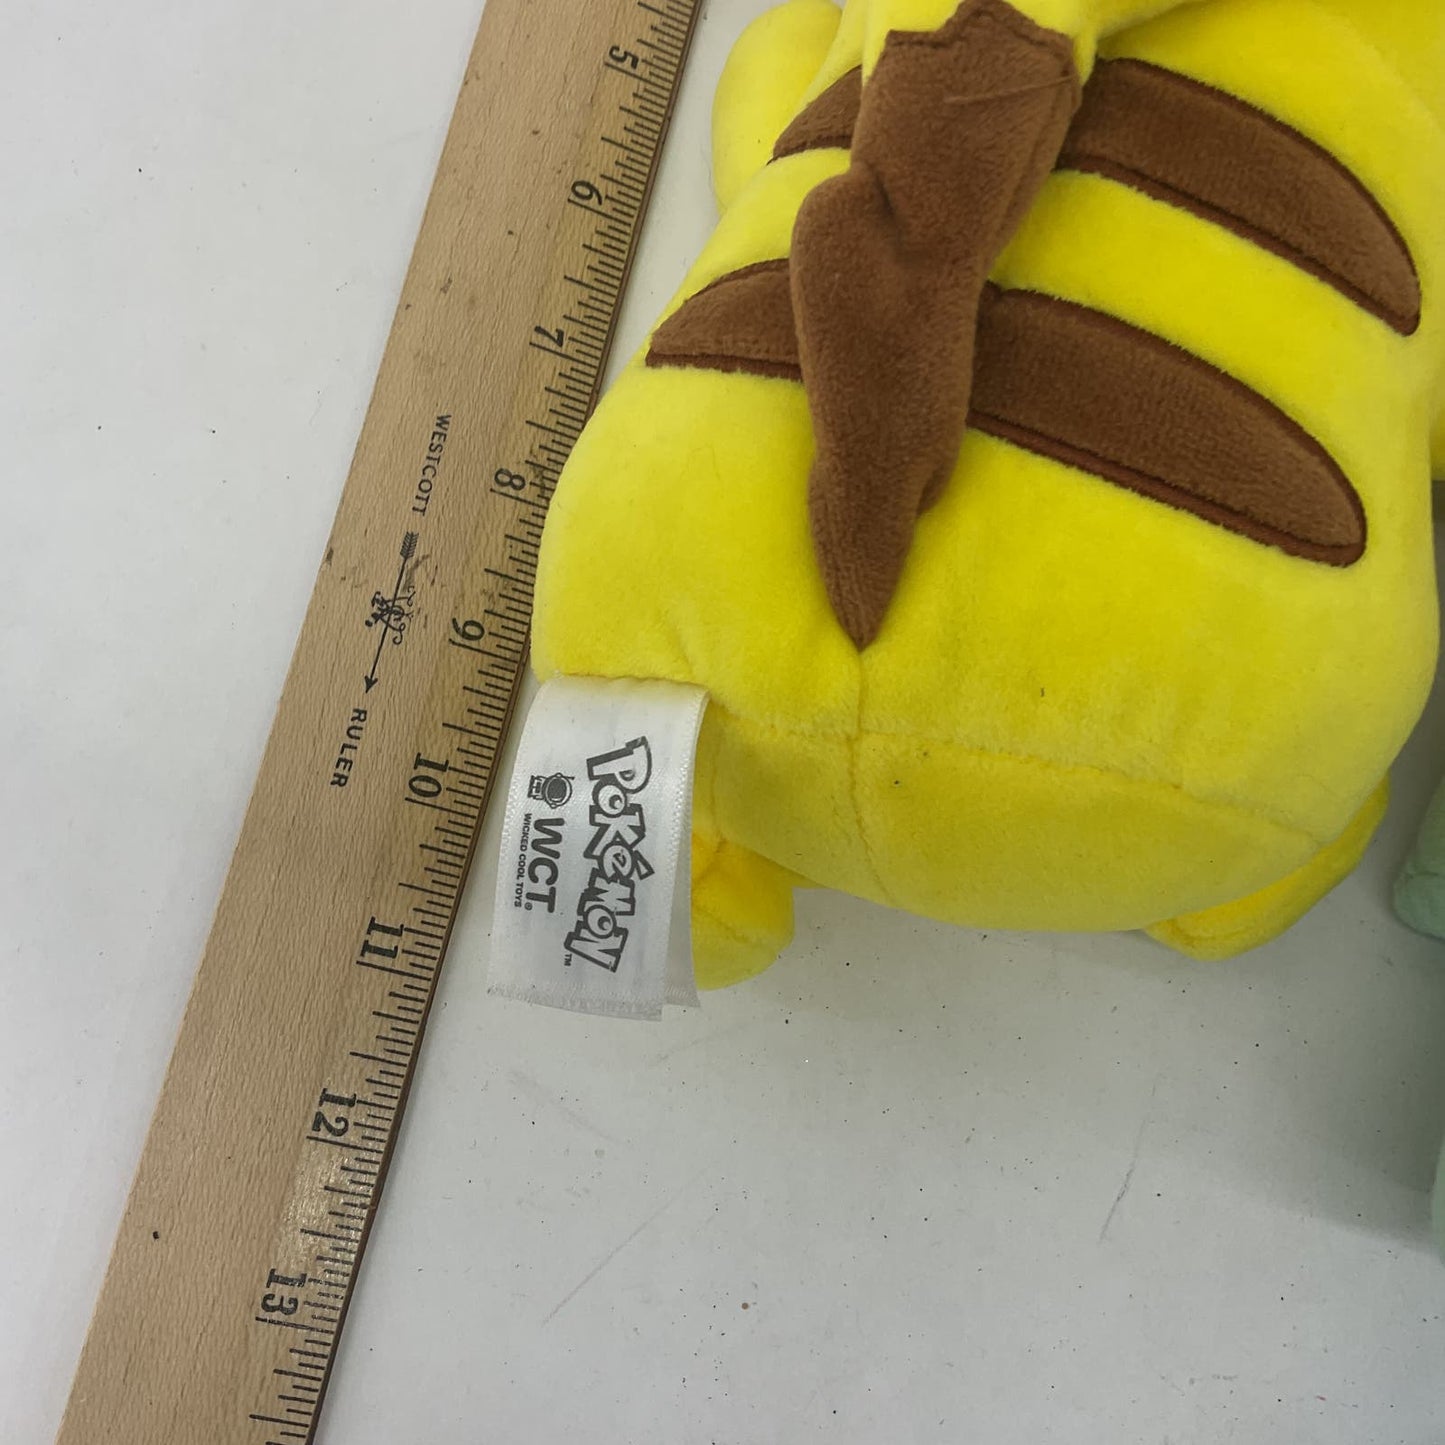 LOT Nintendo Pokemon Yellow Pikachu Green Squirtle Riolu Character Plush Dolls - Warehouse Toys